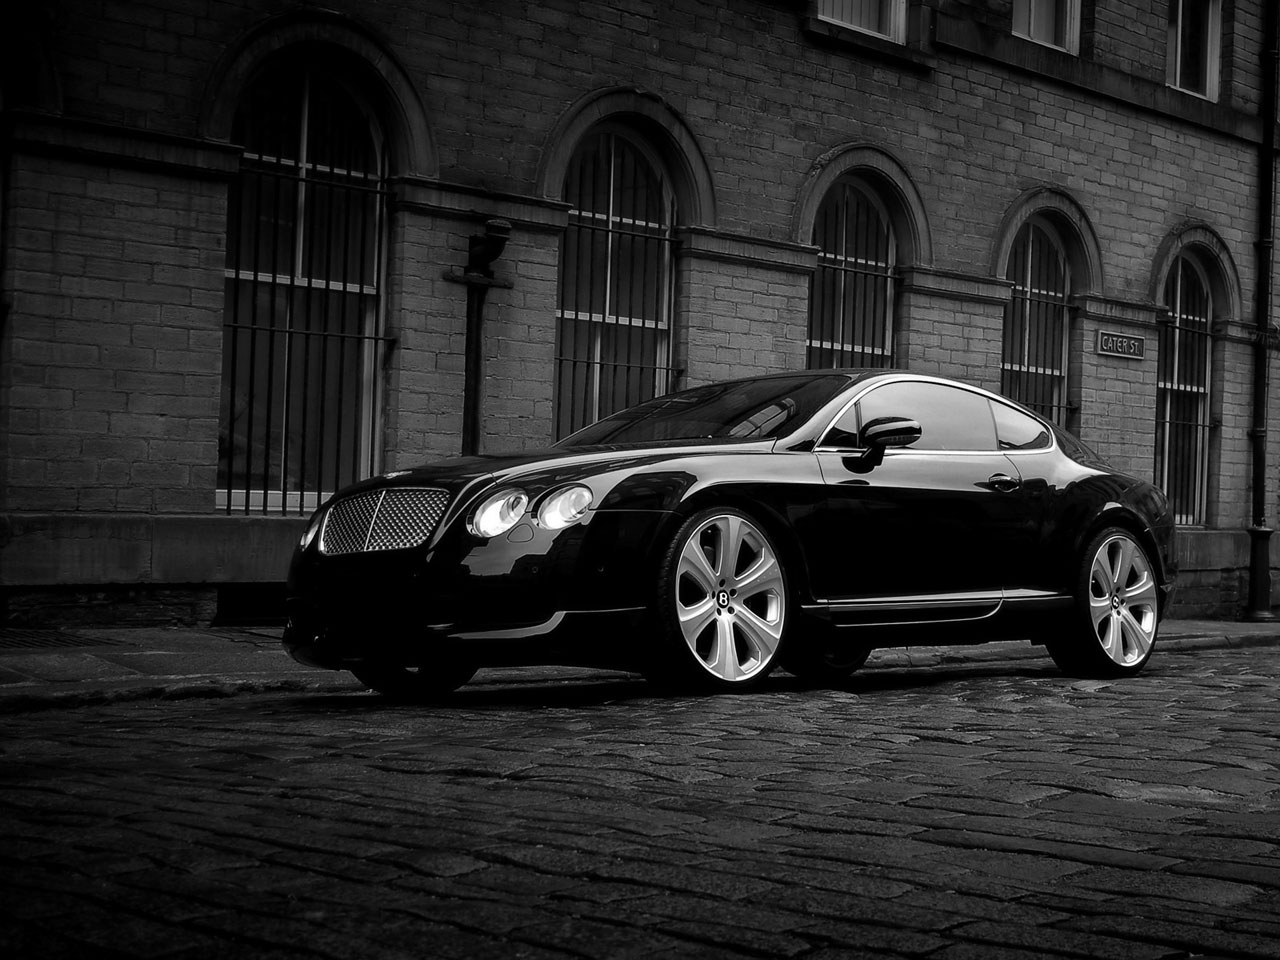 https://blogger.googleusercontent.com/img/b/R29vZ2xl/AVvXsEhm-TnUEaqxeXksTrj6a1mzJpIJ0YEOSP5eahpzW45E7ucg0p4AftEuE7rWMENcoYaPjJyYqOJEBkhfEN1aQkJ4YvPPaEpz9bq5RpUHDGzzIQI7rWc8I1cW8nSzqY8NtJuql5iLQzlIyPus/s1600/Bentley_Continental_GT-S.jpg